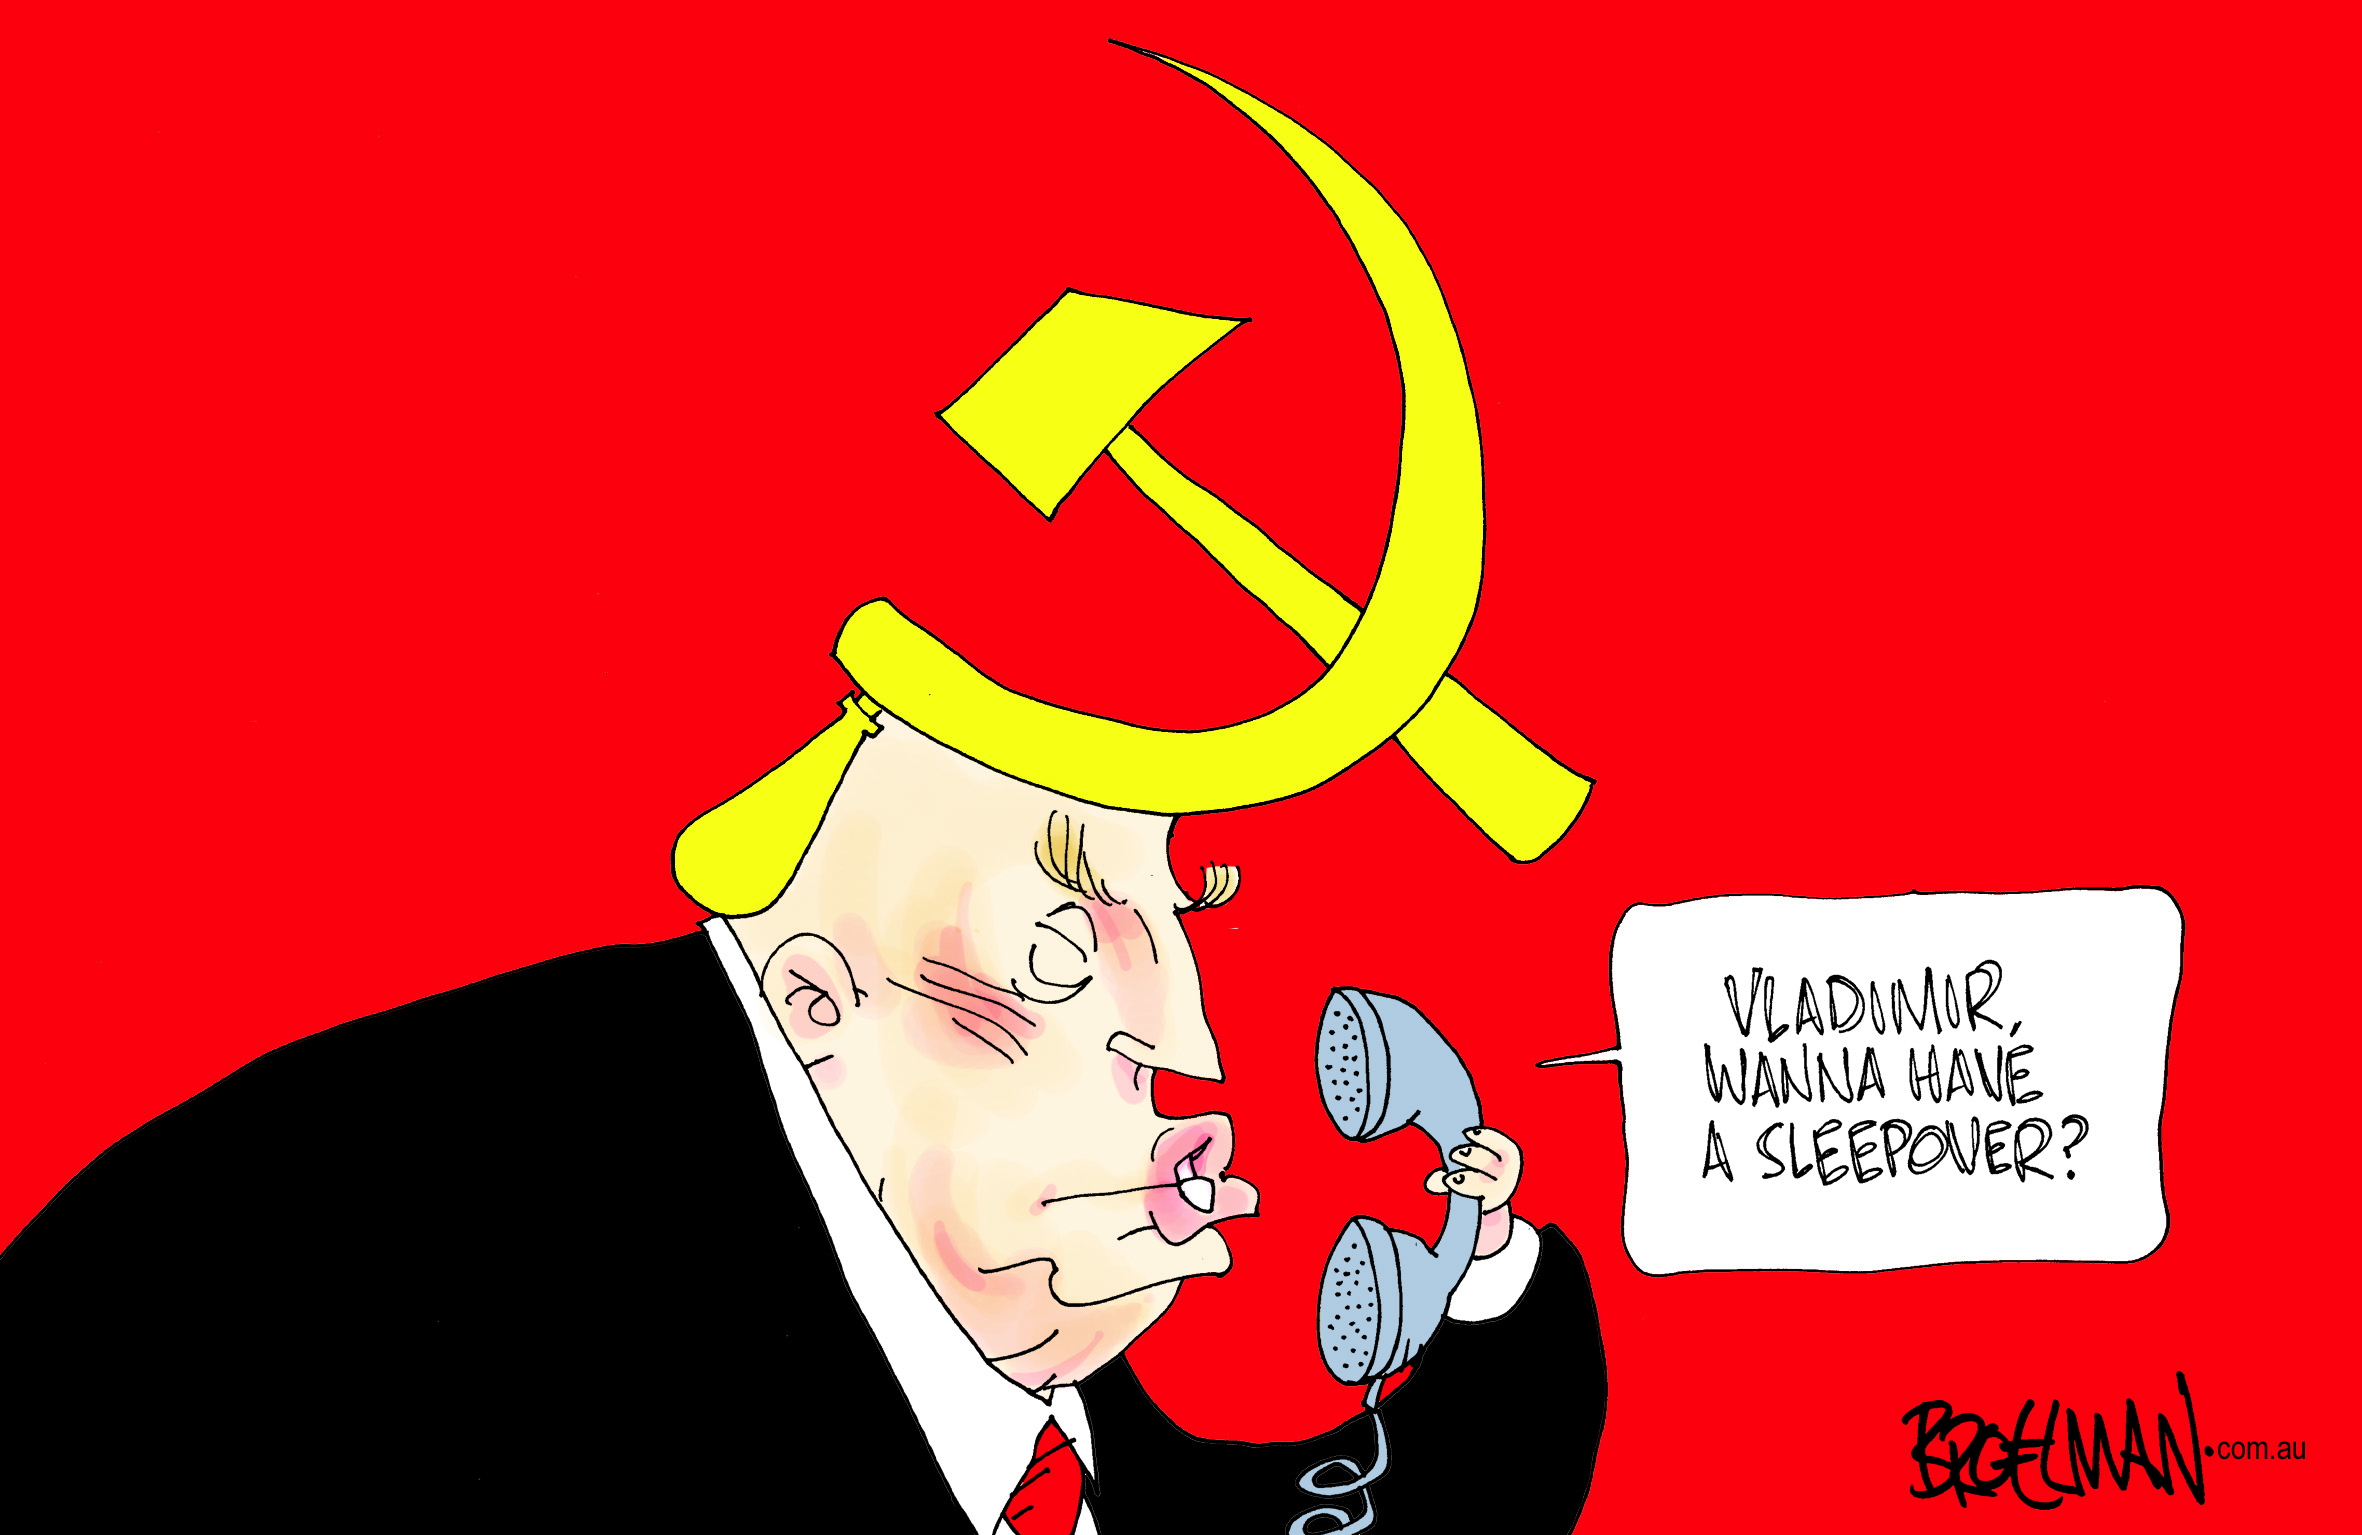 Political cartoon . Trump Putin sleepover Helsinki summit communism